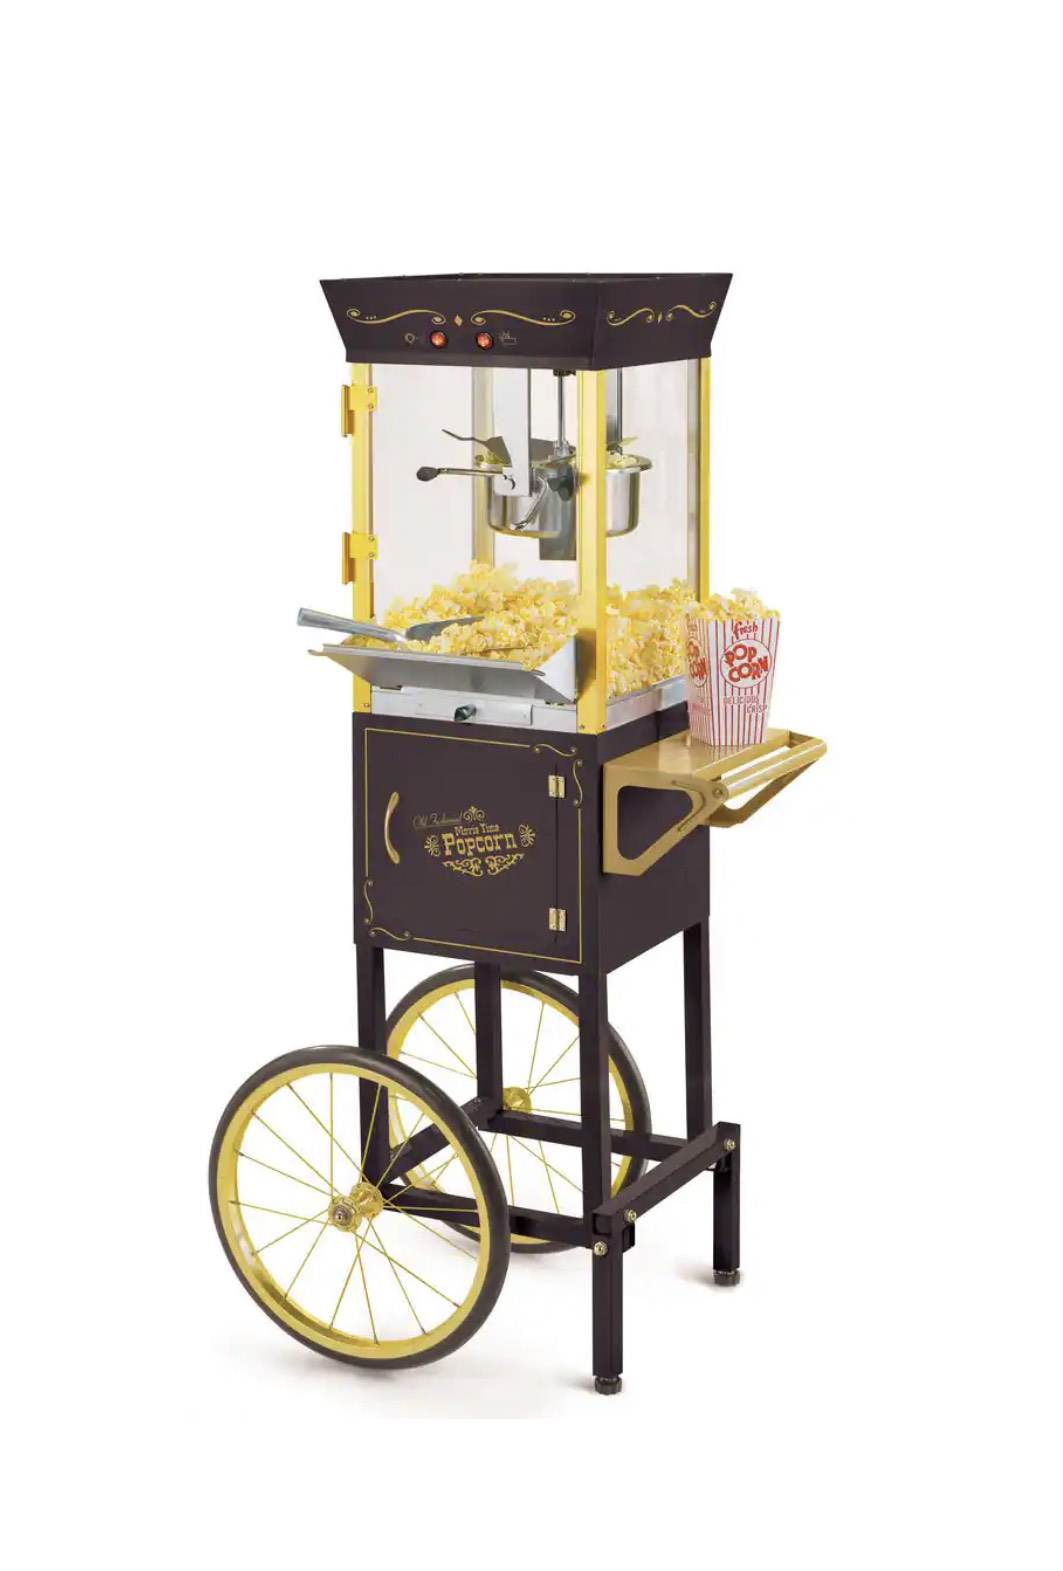 Popcorn machine for rent in LA